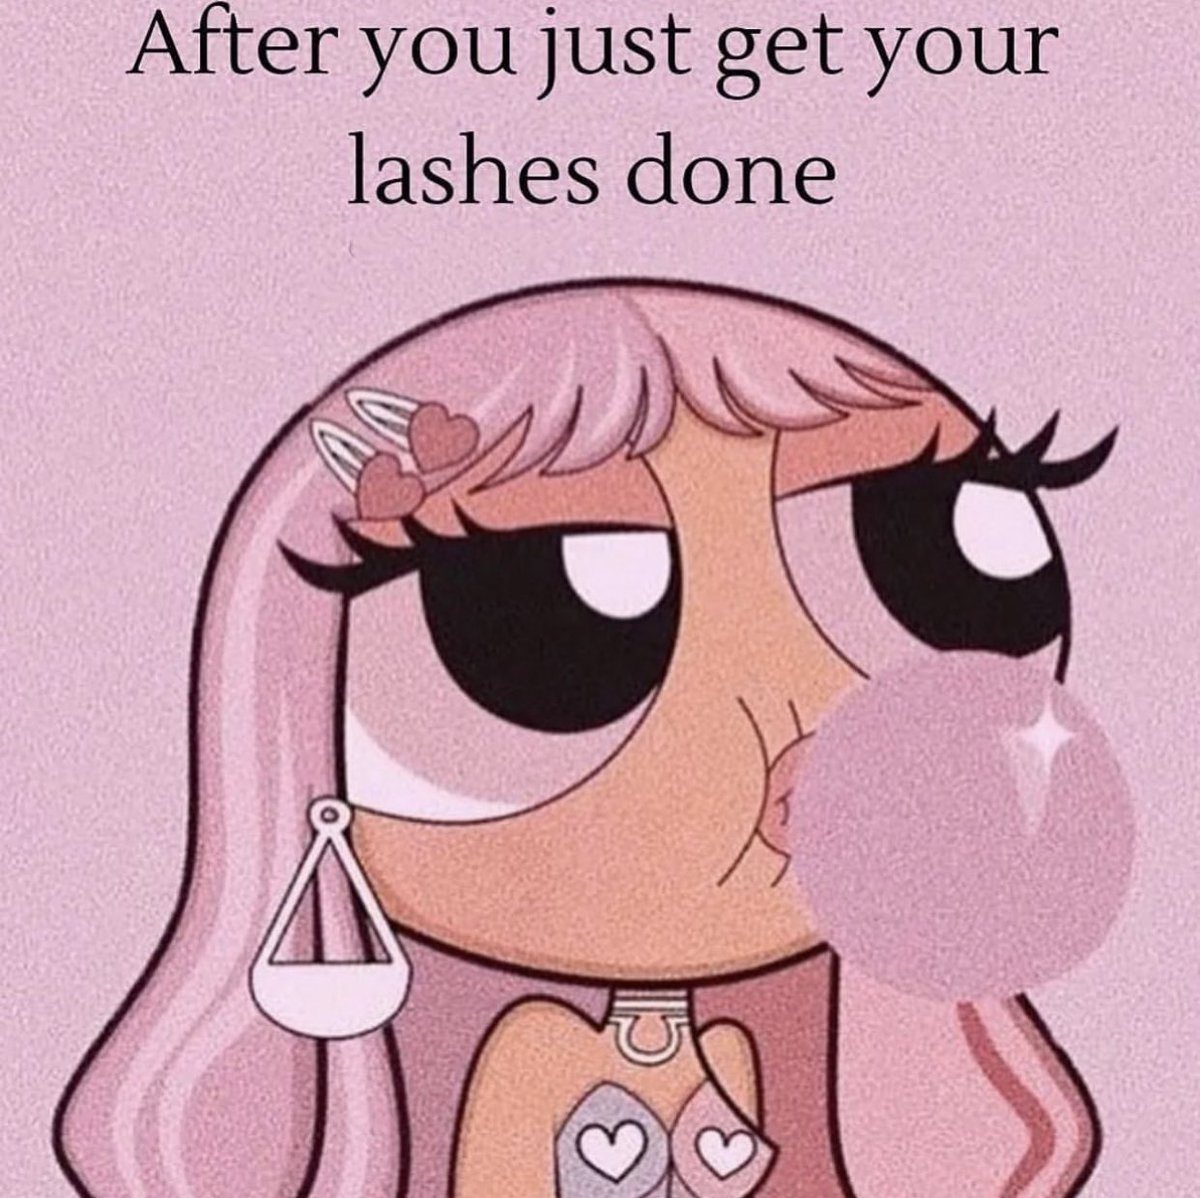 Pretty bitchhhh M😍😍D💁🏻‍♀️

#lashextensioninlagos #lashes #lagoslashtech #lashextensions #lashtech